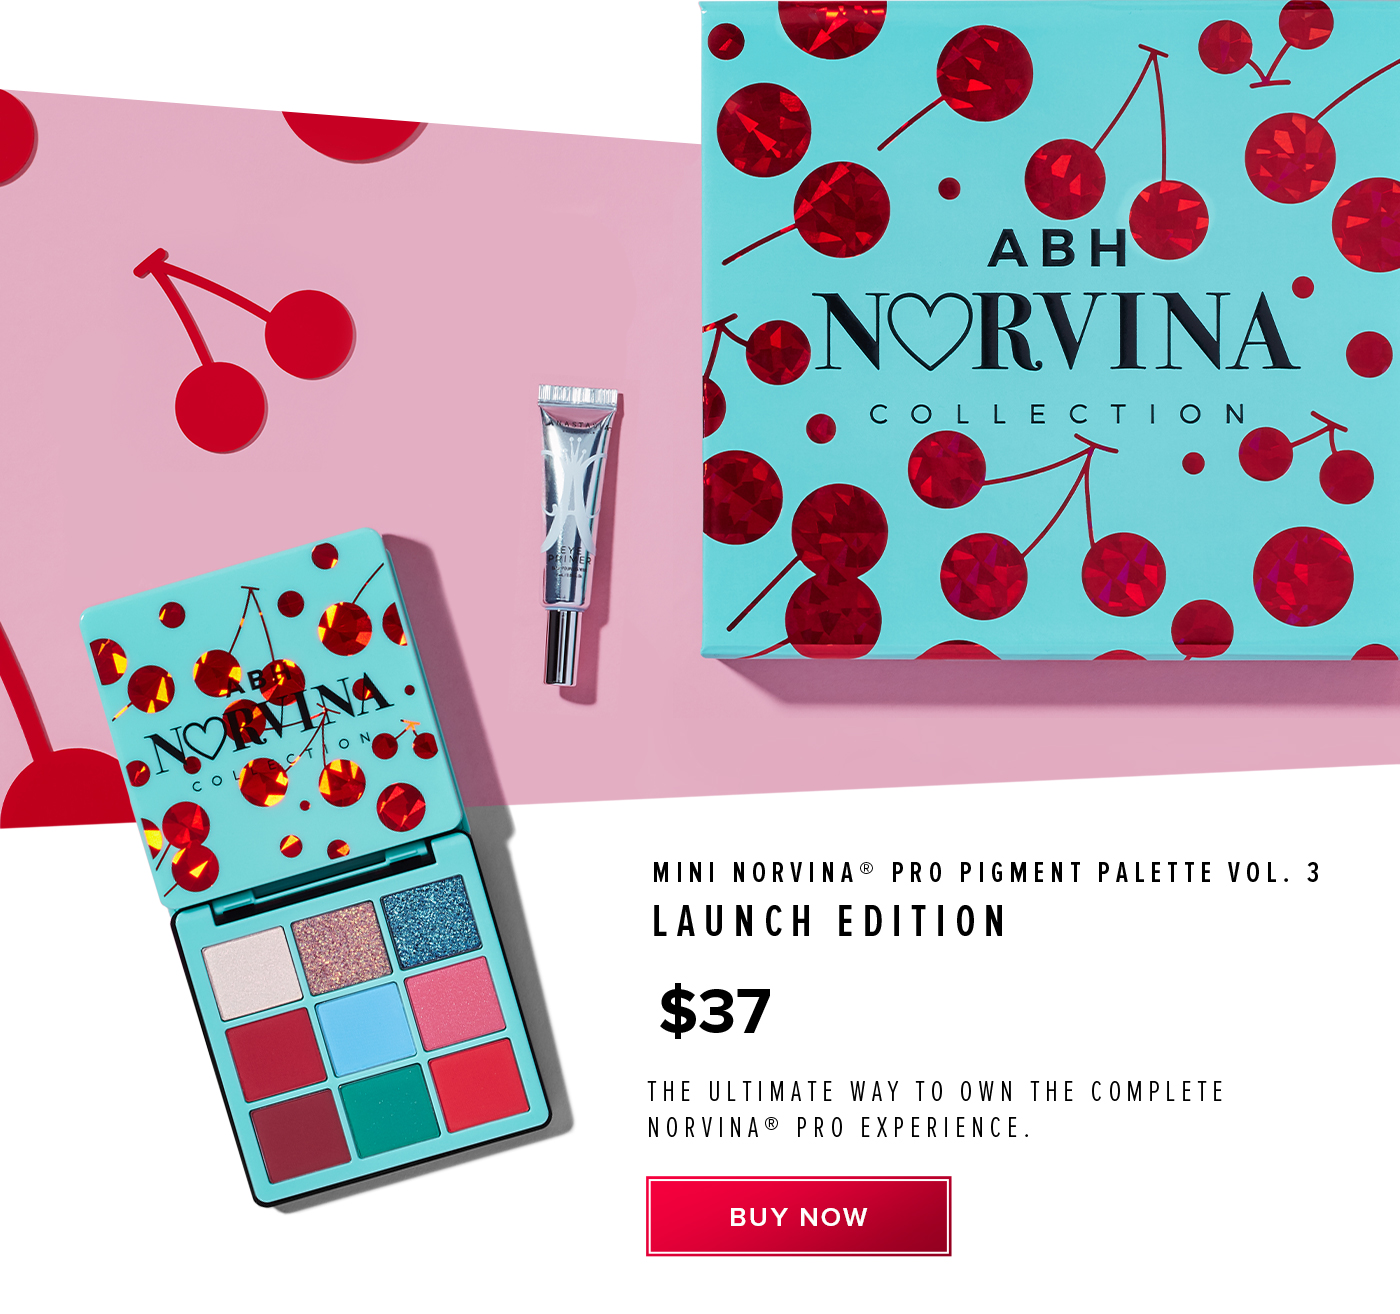 Mini Norvina Pro Pigment Vol. 3 Launch Edition $37.